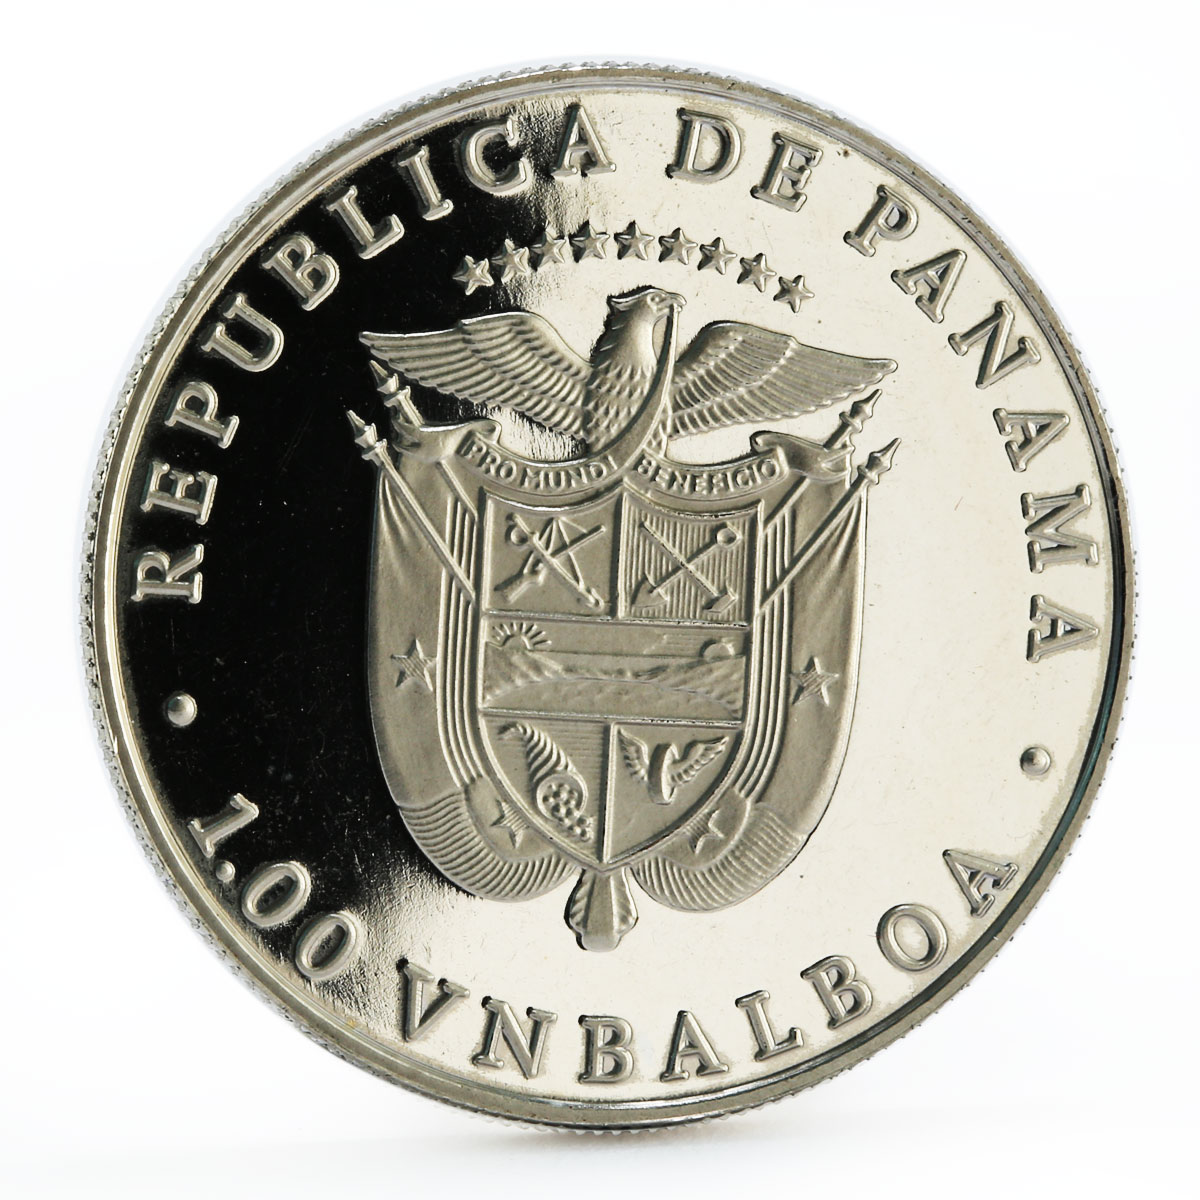 Panama 1 balboa Calgary Olympic Winter Games series Biathlon silver coin 1988